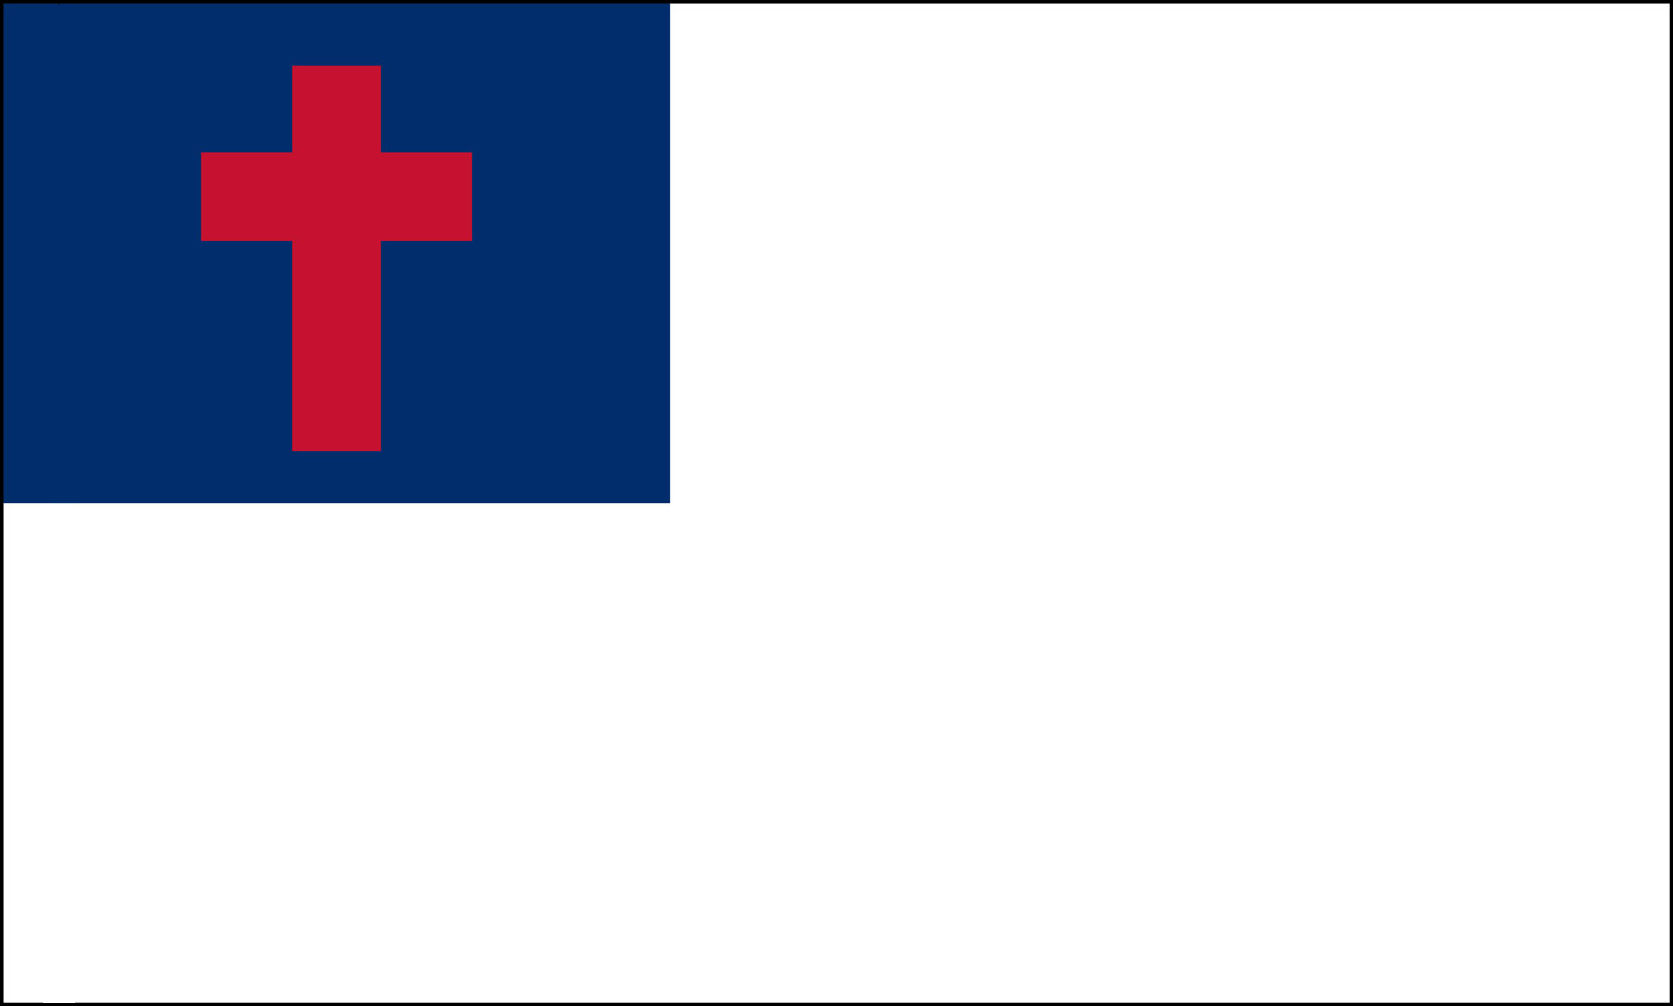 12x18" poly Christian flag on a stick